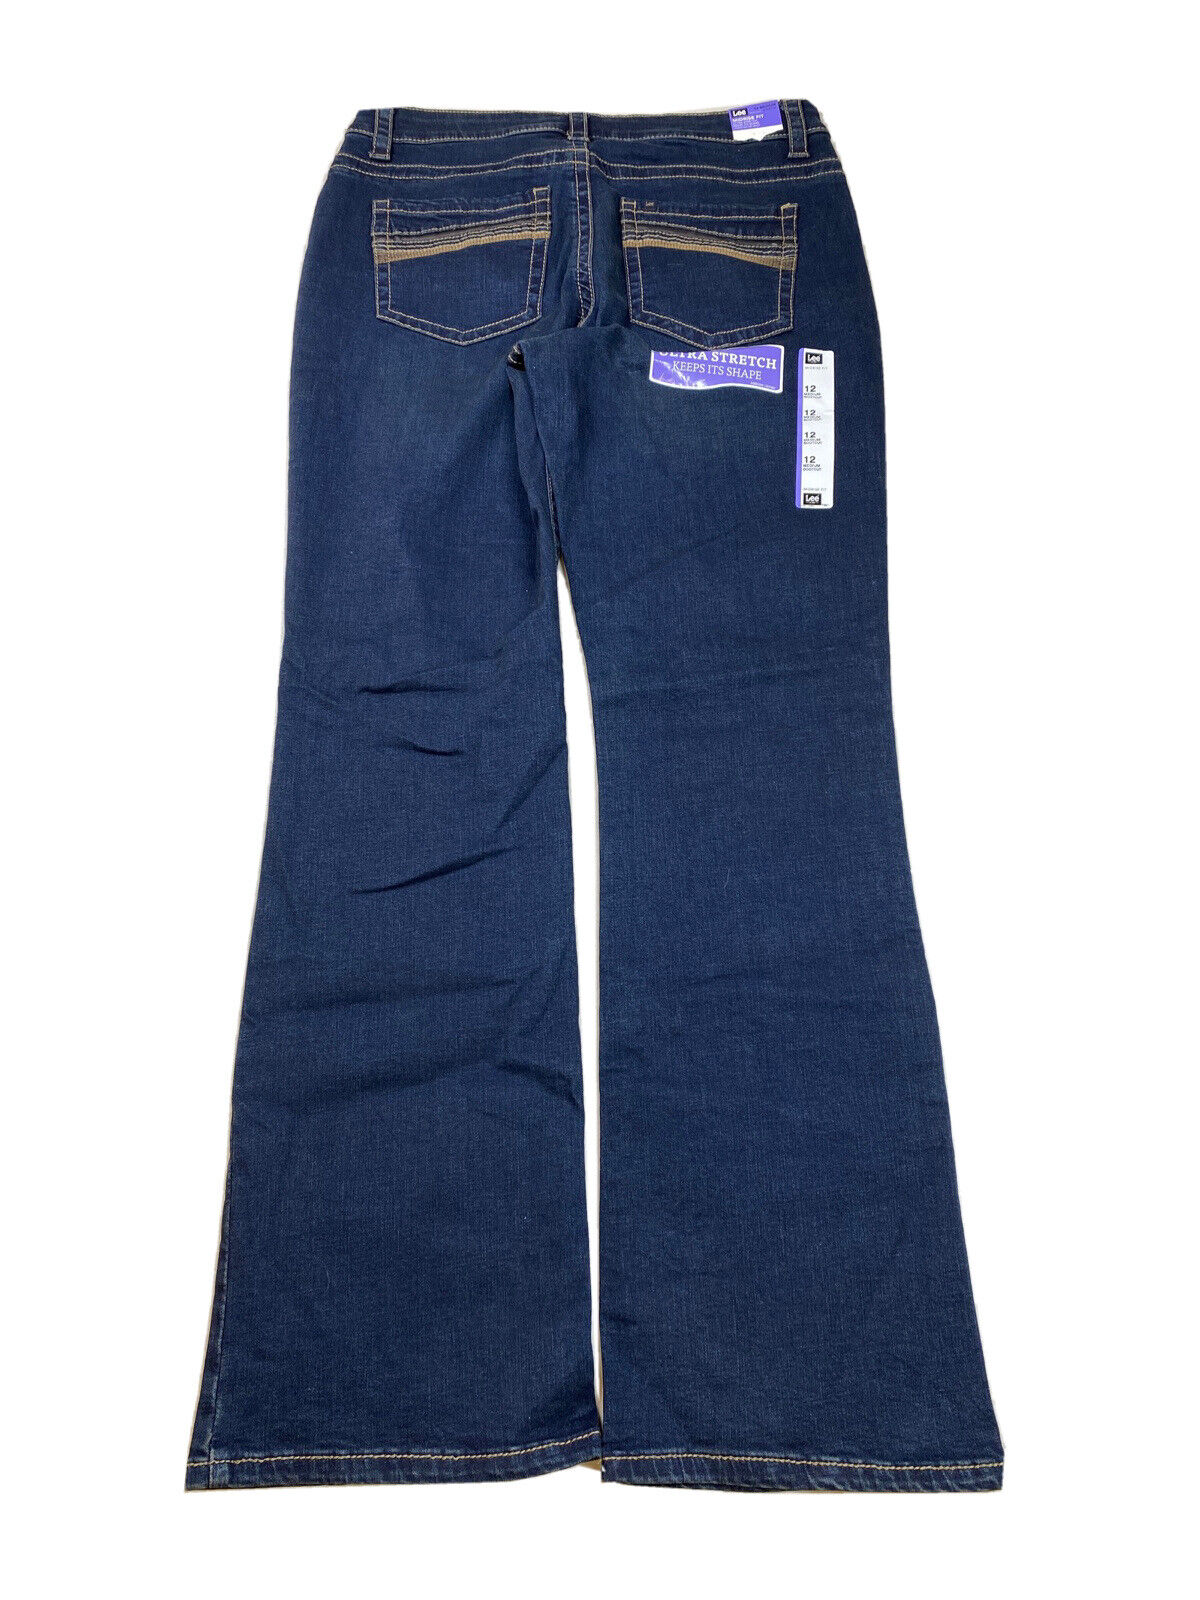 NEW Lee Women's Dark Wash Mid Rise Stretch Boot Cut Denim Jeans - 12 M